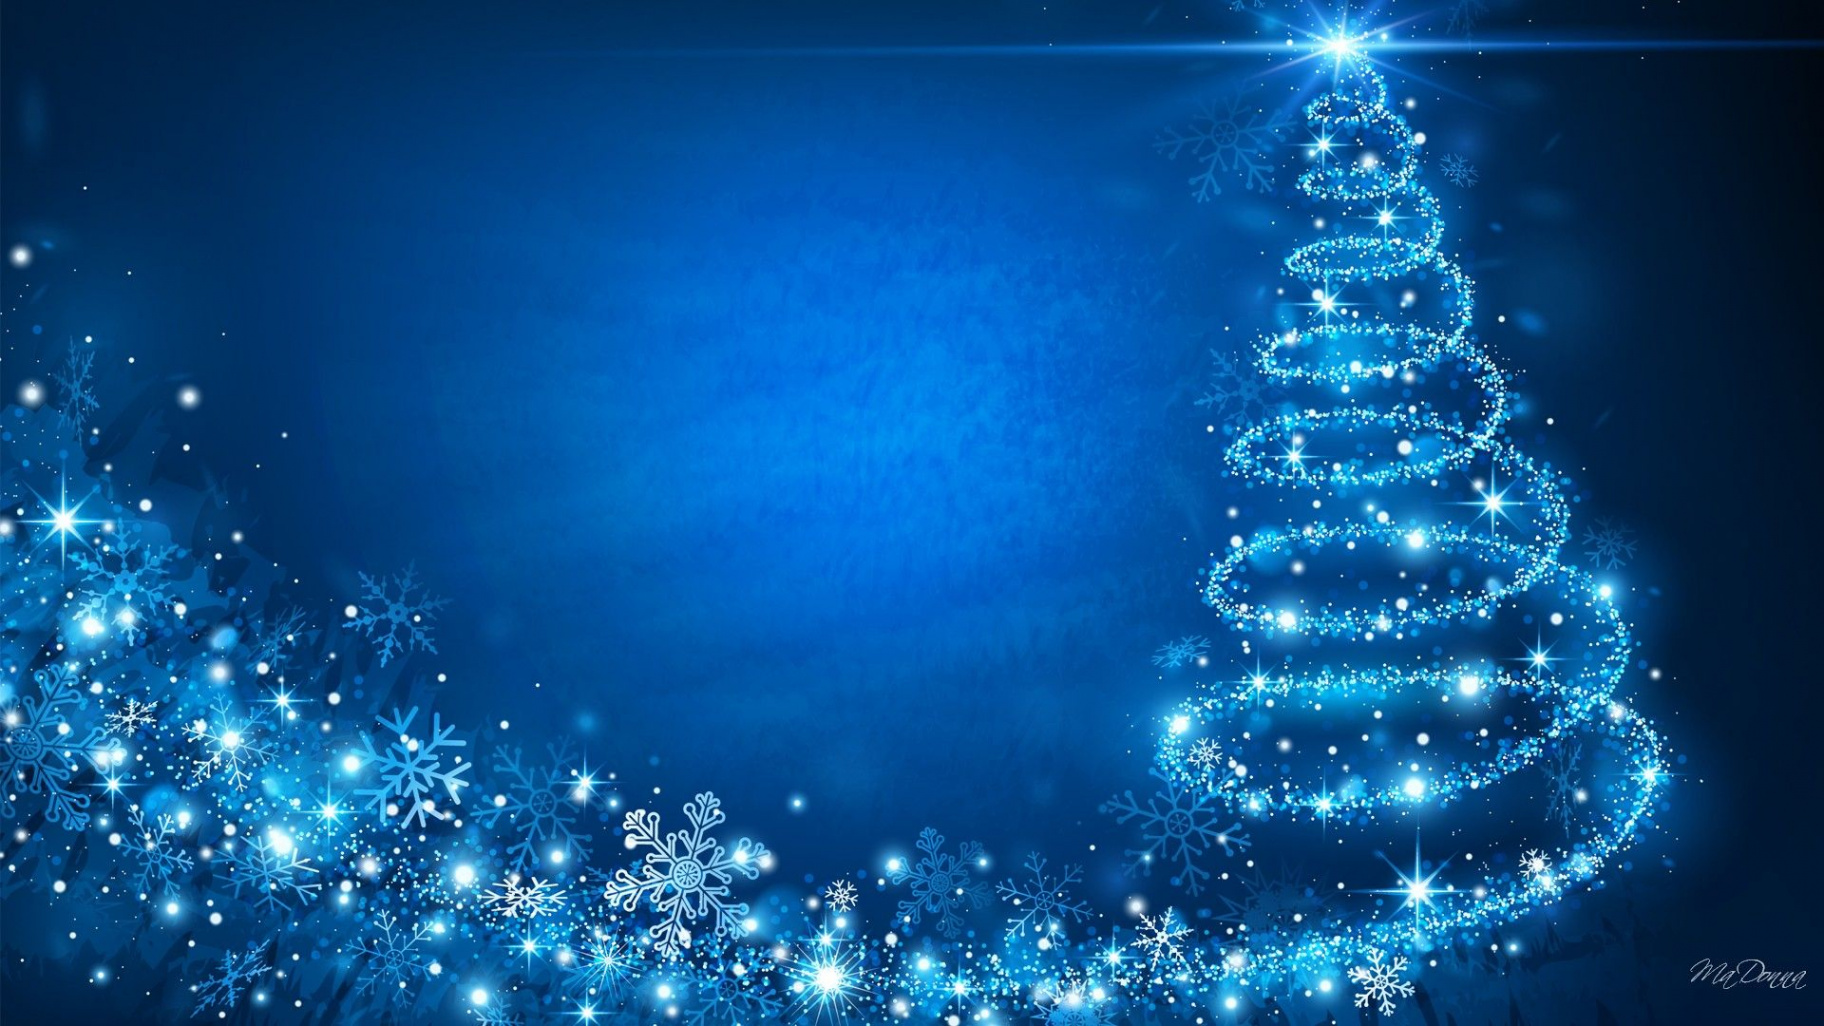 A BLUE CHRISTMAS  Christmas wallpaper hd, Christmas tree